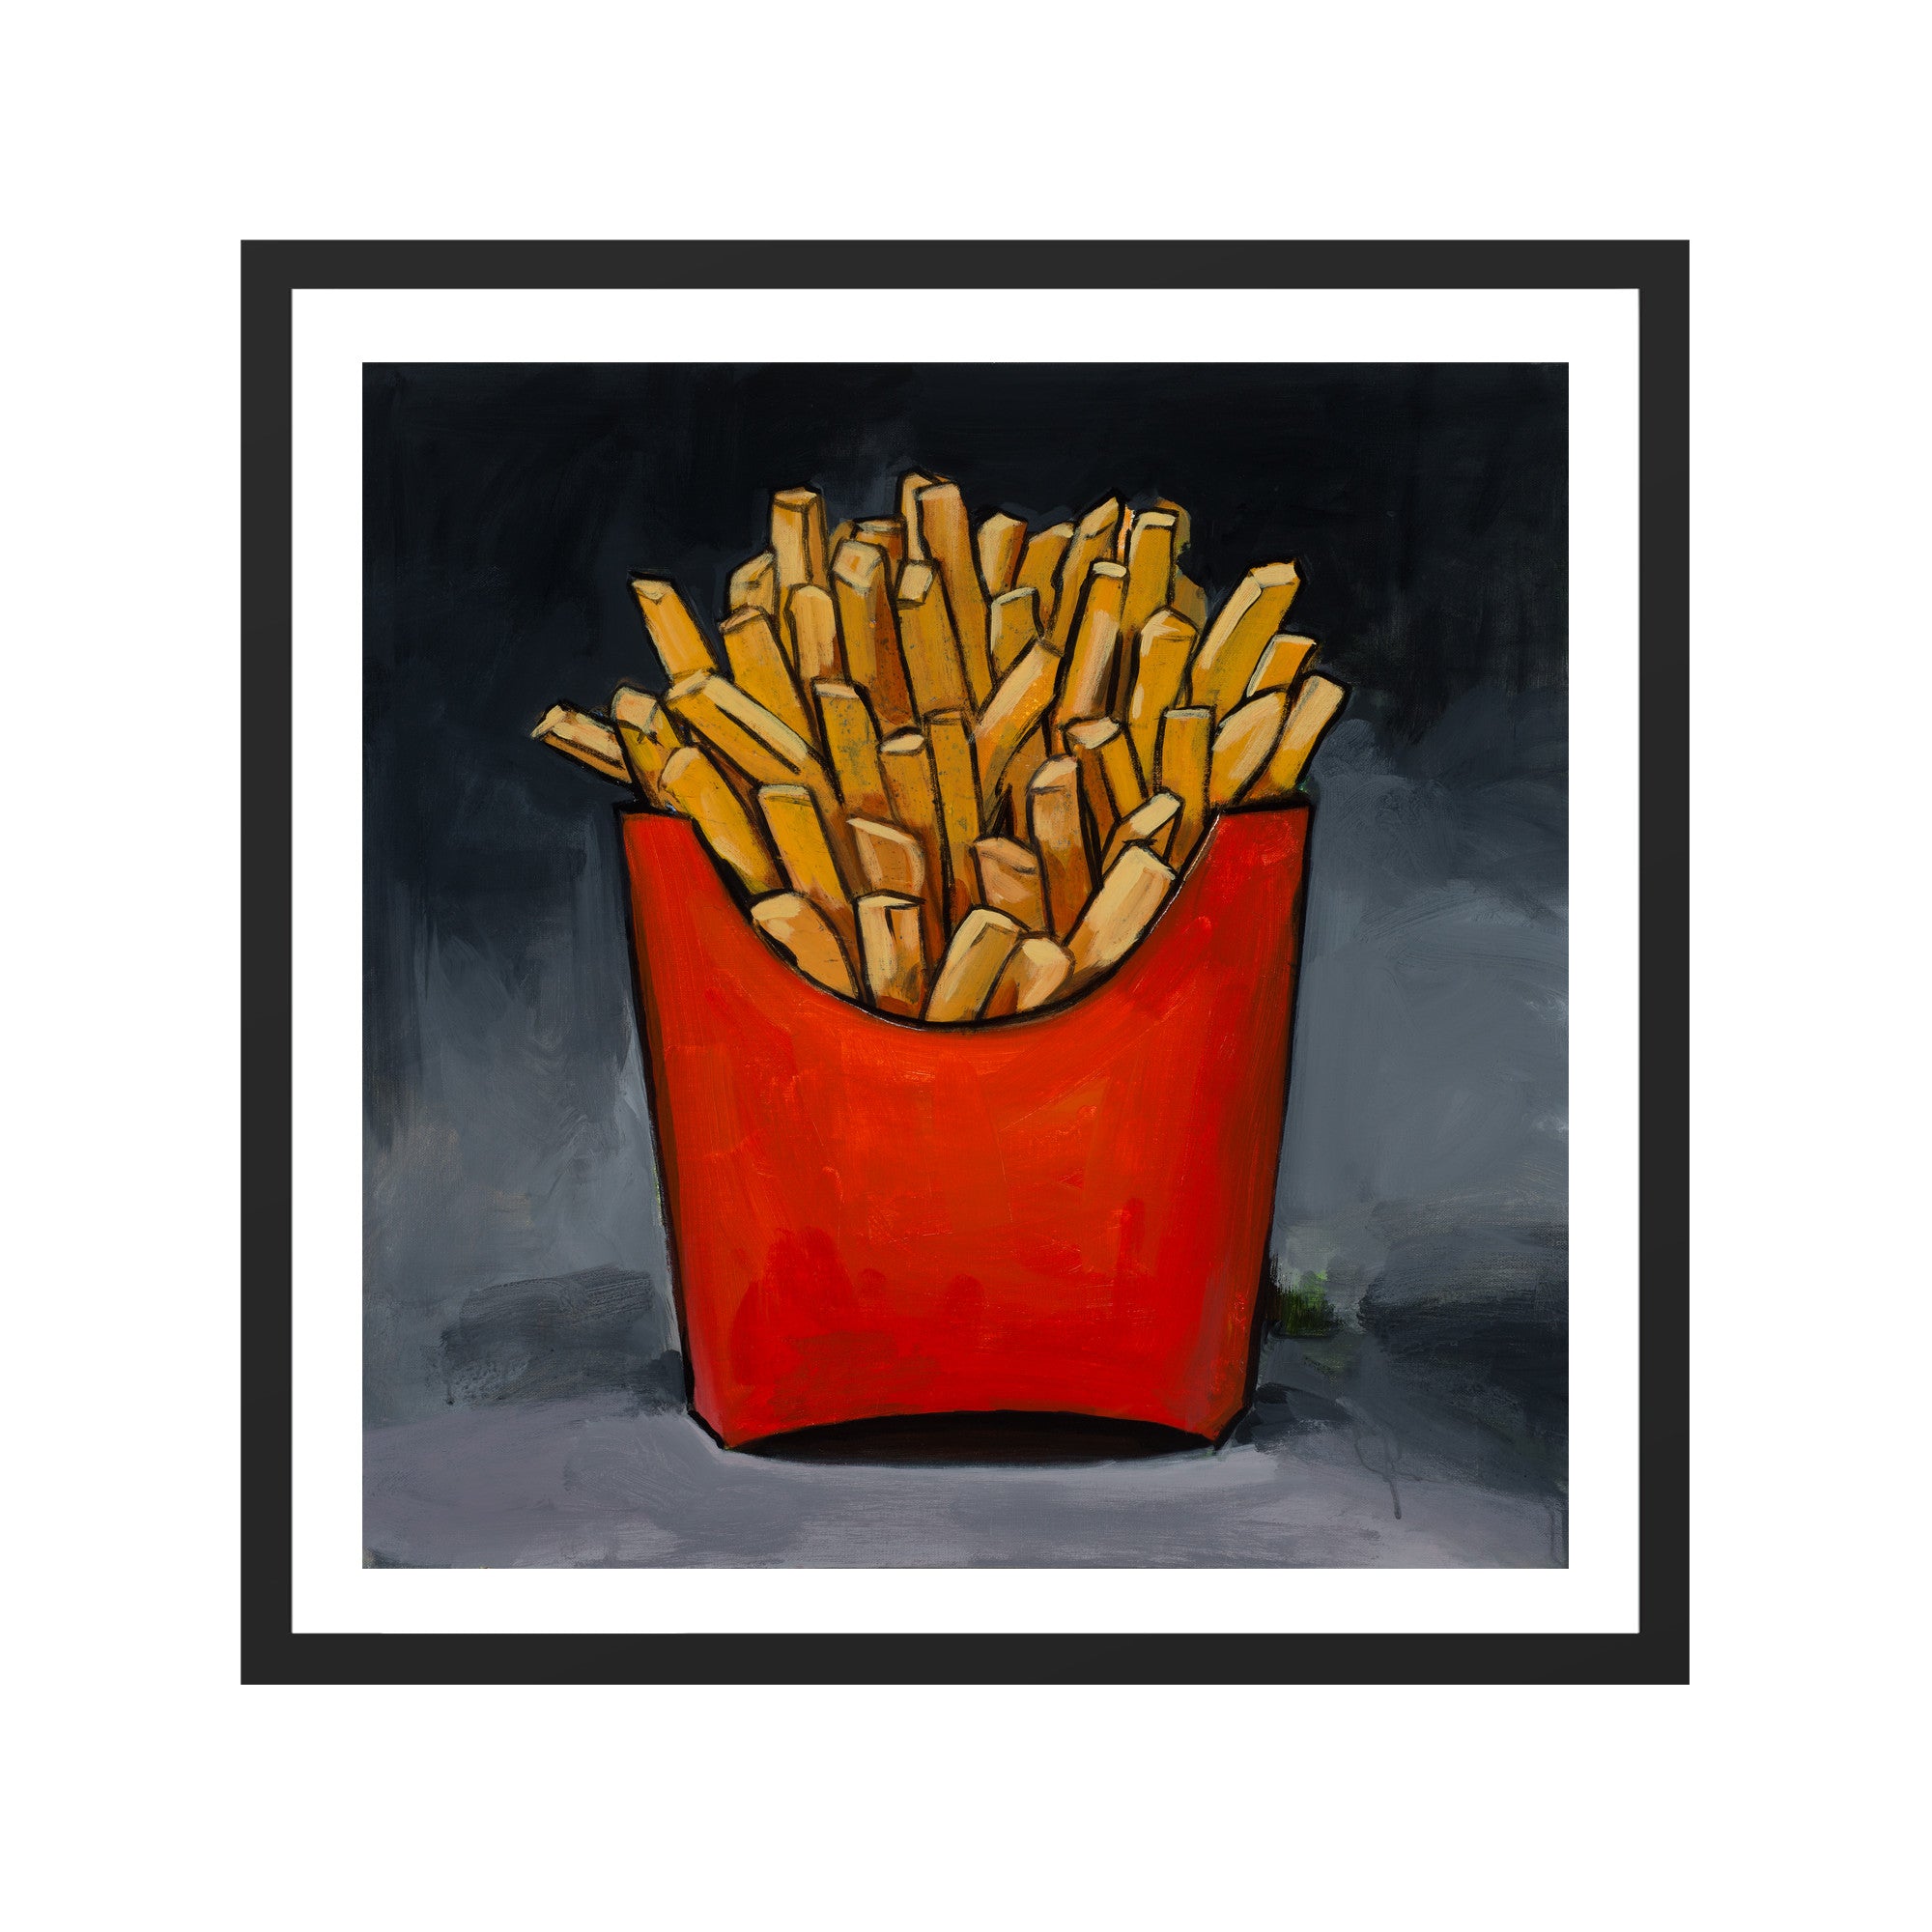 French Fries (Savarin)